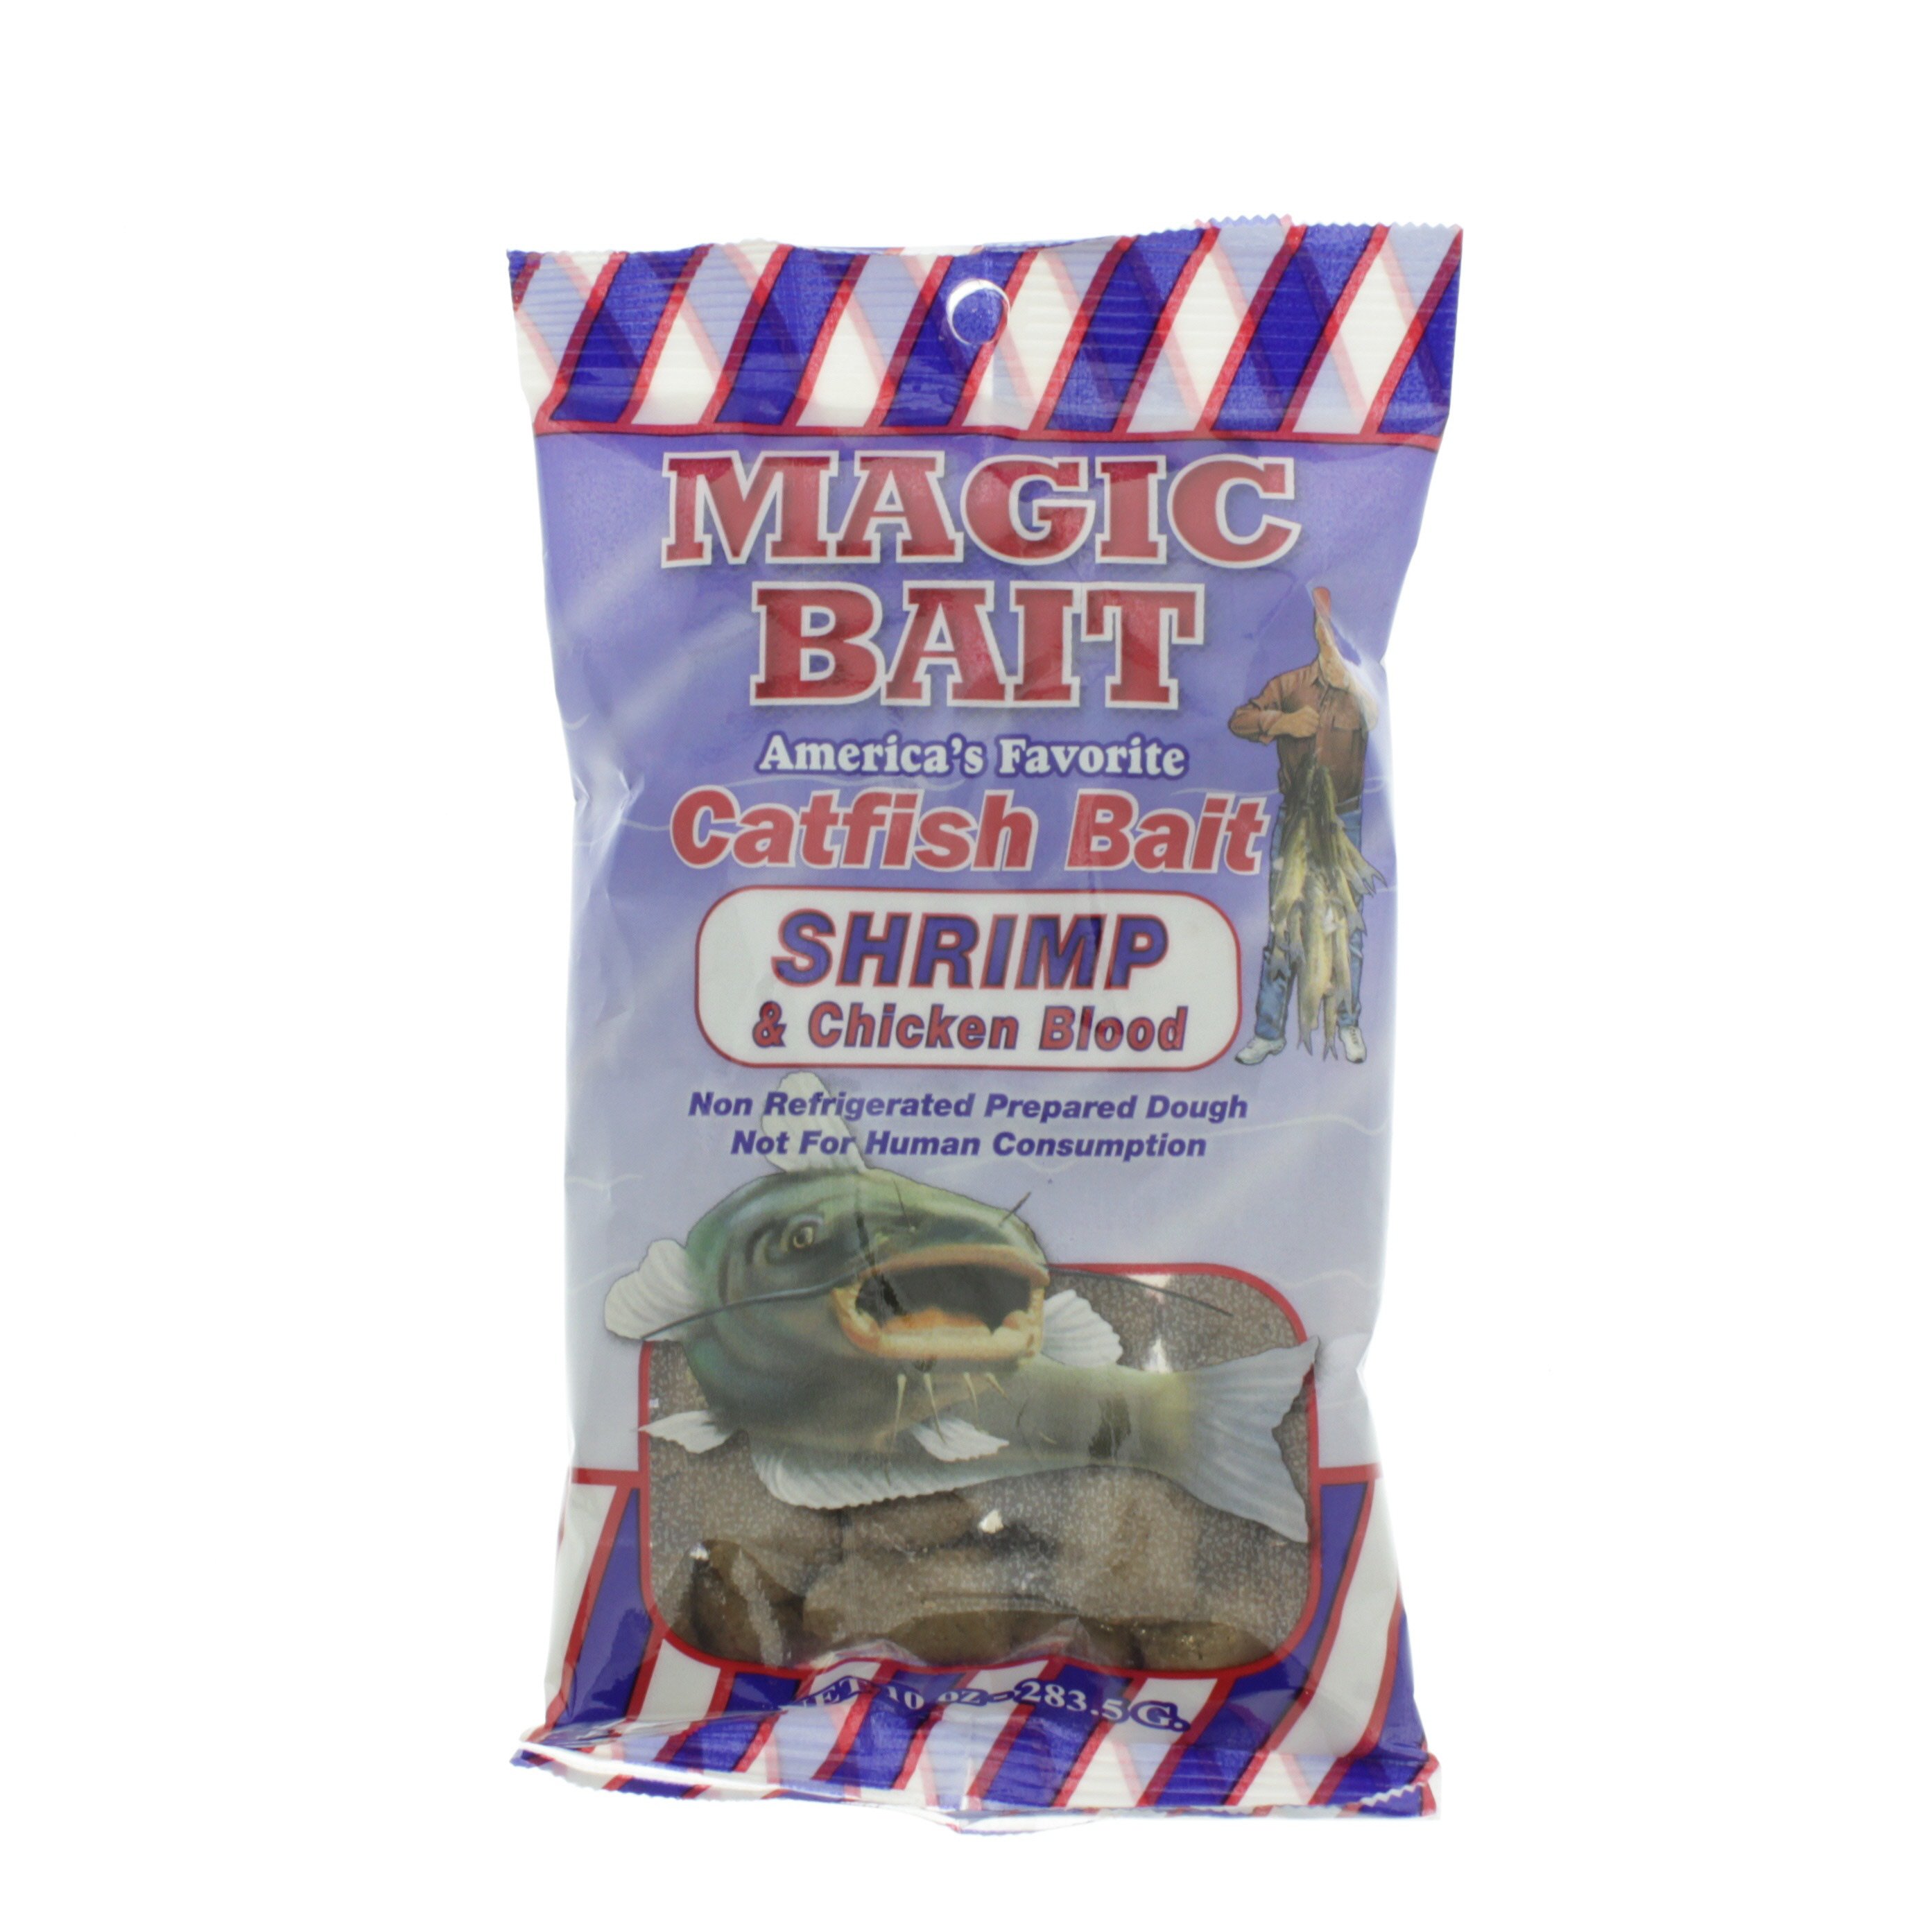 Magic Bait Shrimp & Chicken Blood Catfish Bait - Shop Fishing at H-E-B